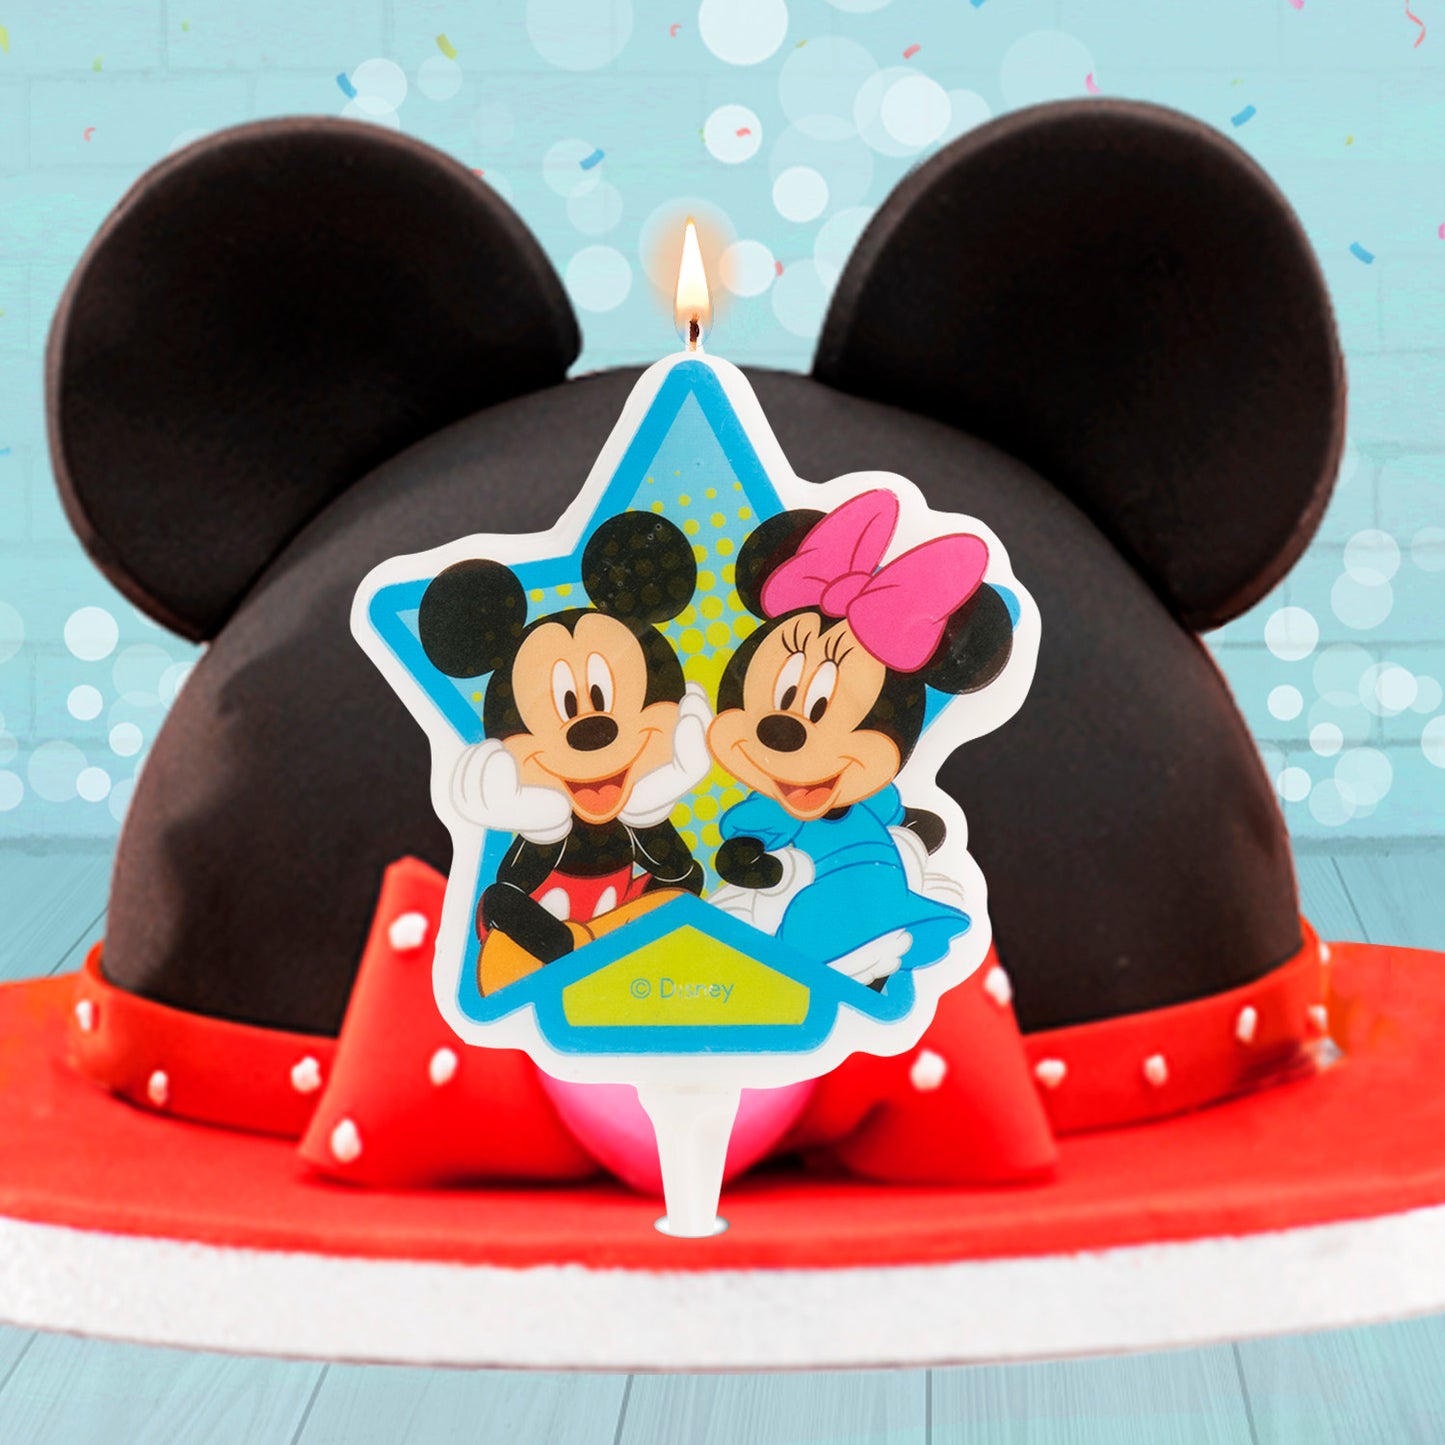 Kerze Mickey und Minnie Mouse